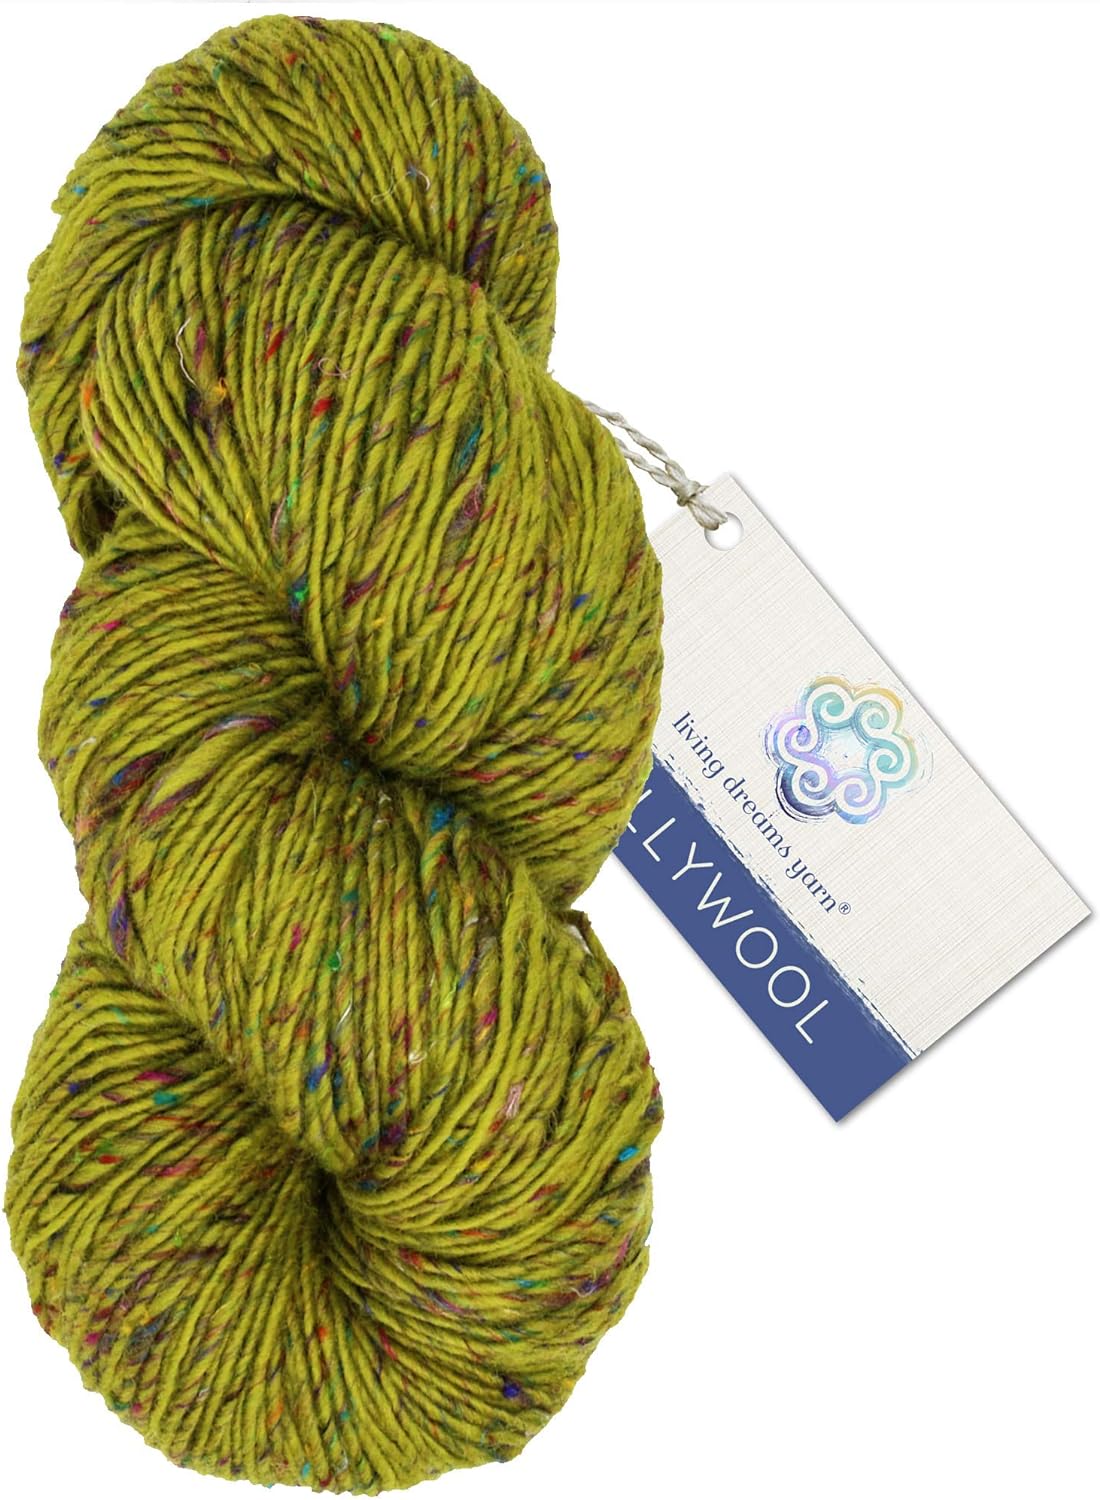 BOLLYWOOL SARI YARN - Merino Wool &#x26; Recycled Sari Silk. Single Ply Lopi Art Yarn. Pacific Northwest Homespun, Soft, Squishy. Color: Dakini